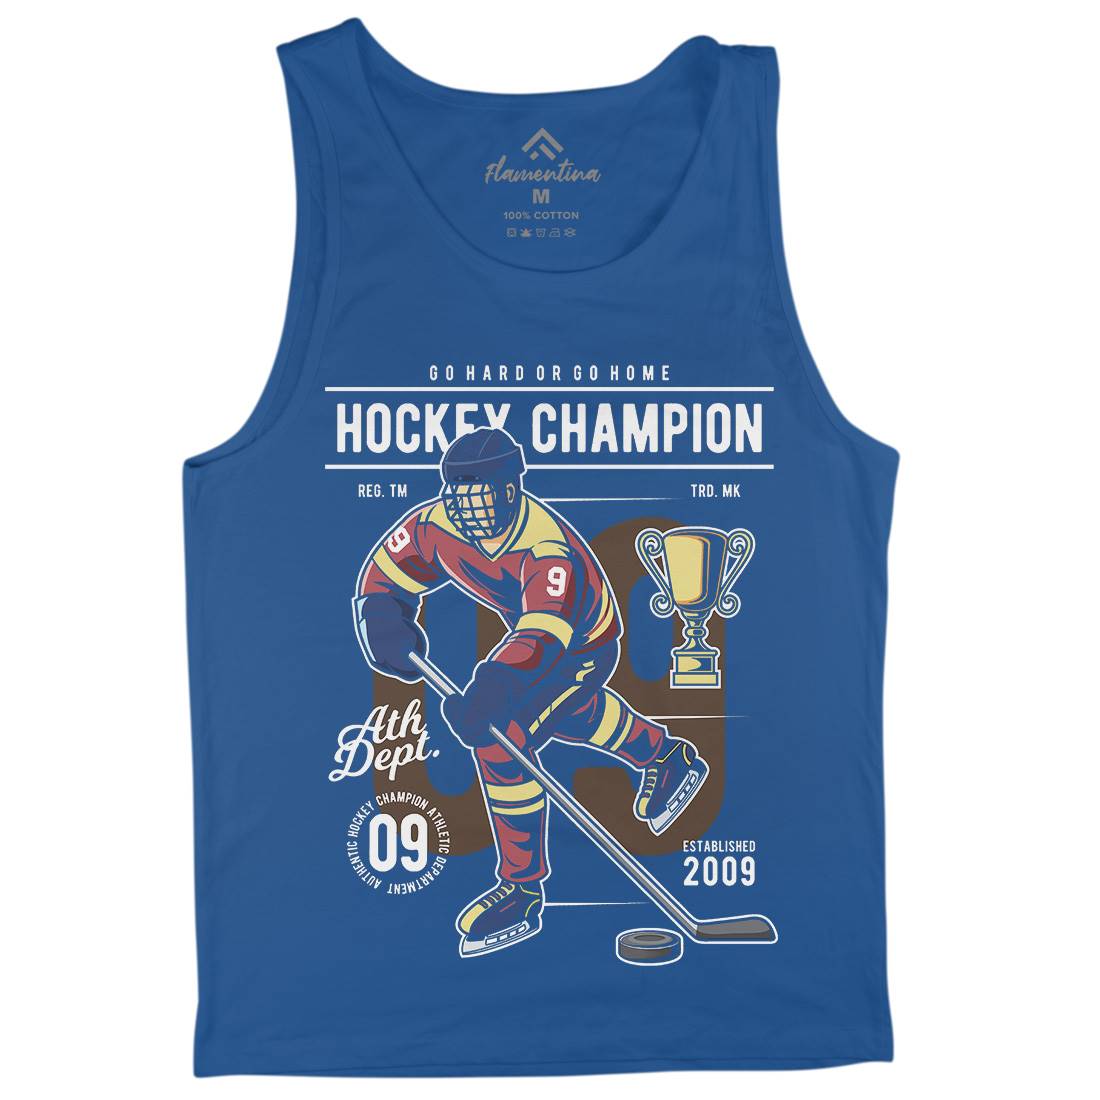 Hockey Champion Mens Tank Top Vest Sport C373